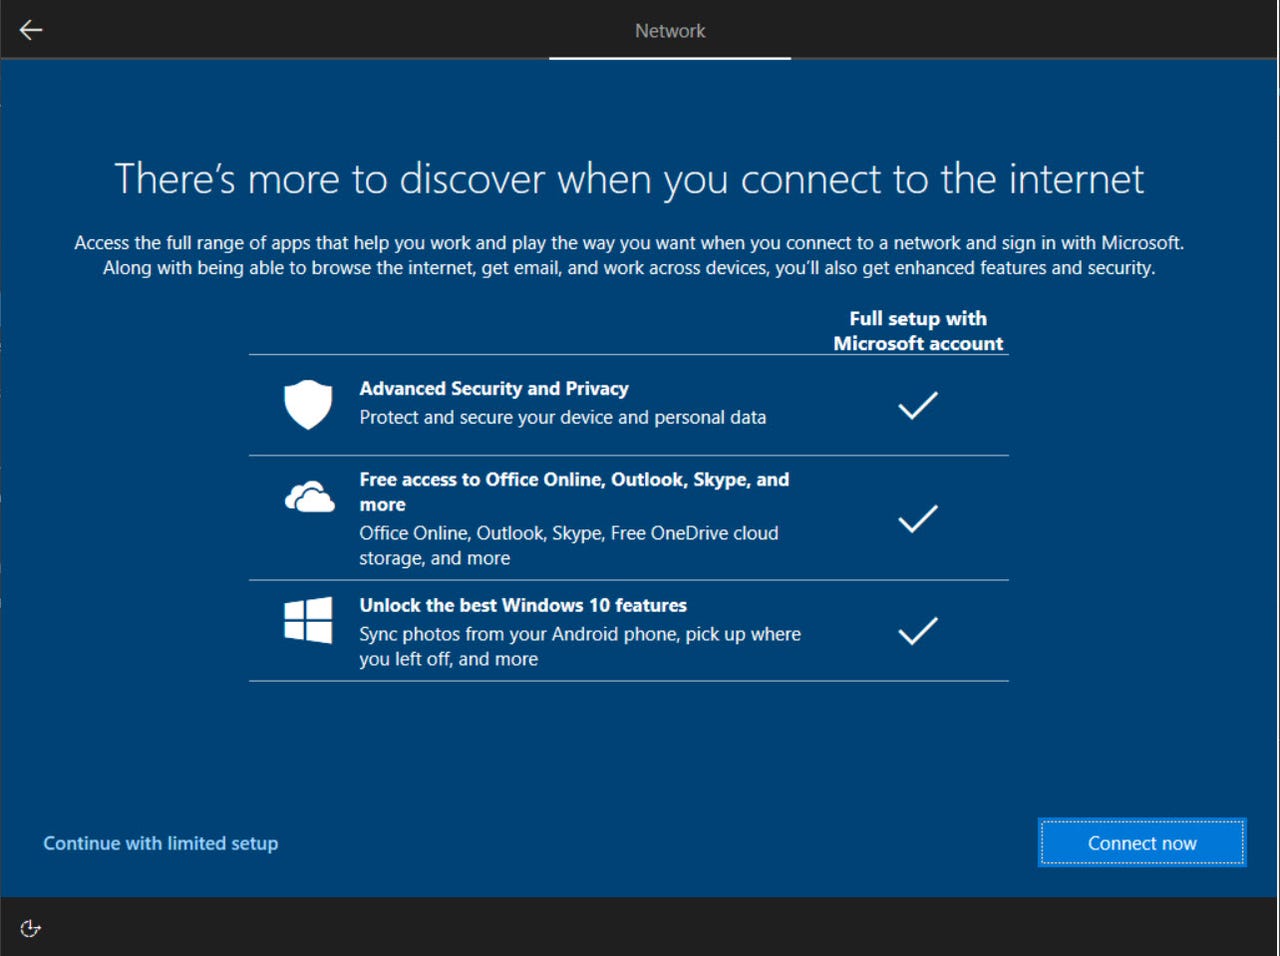 Why Do I Need a Microsoft Account for Windows 10 Setup?